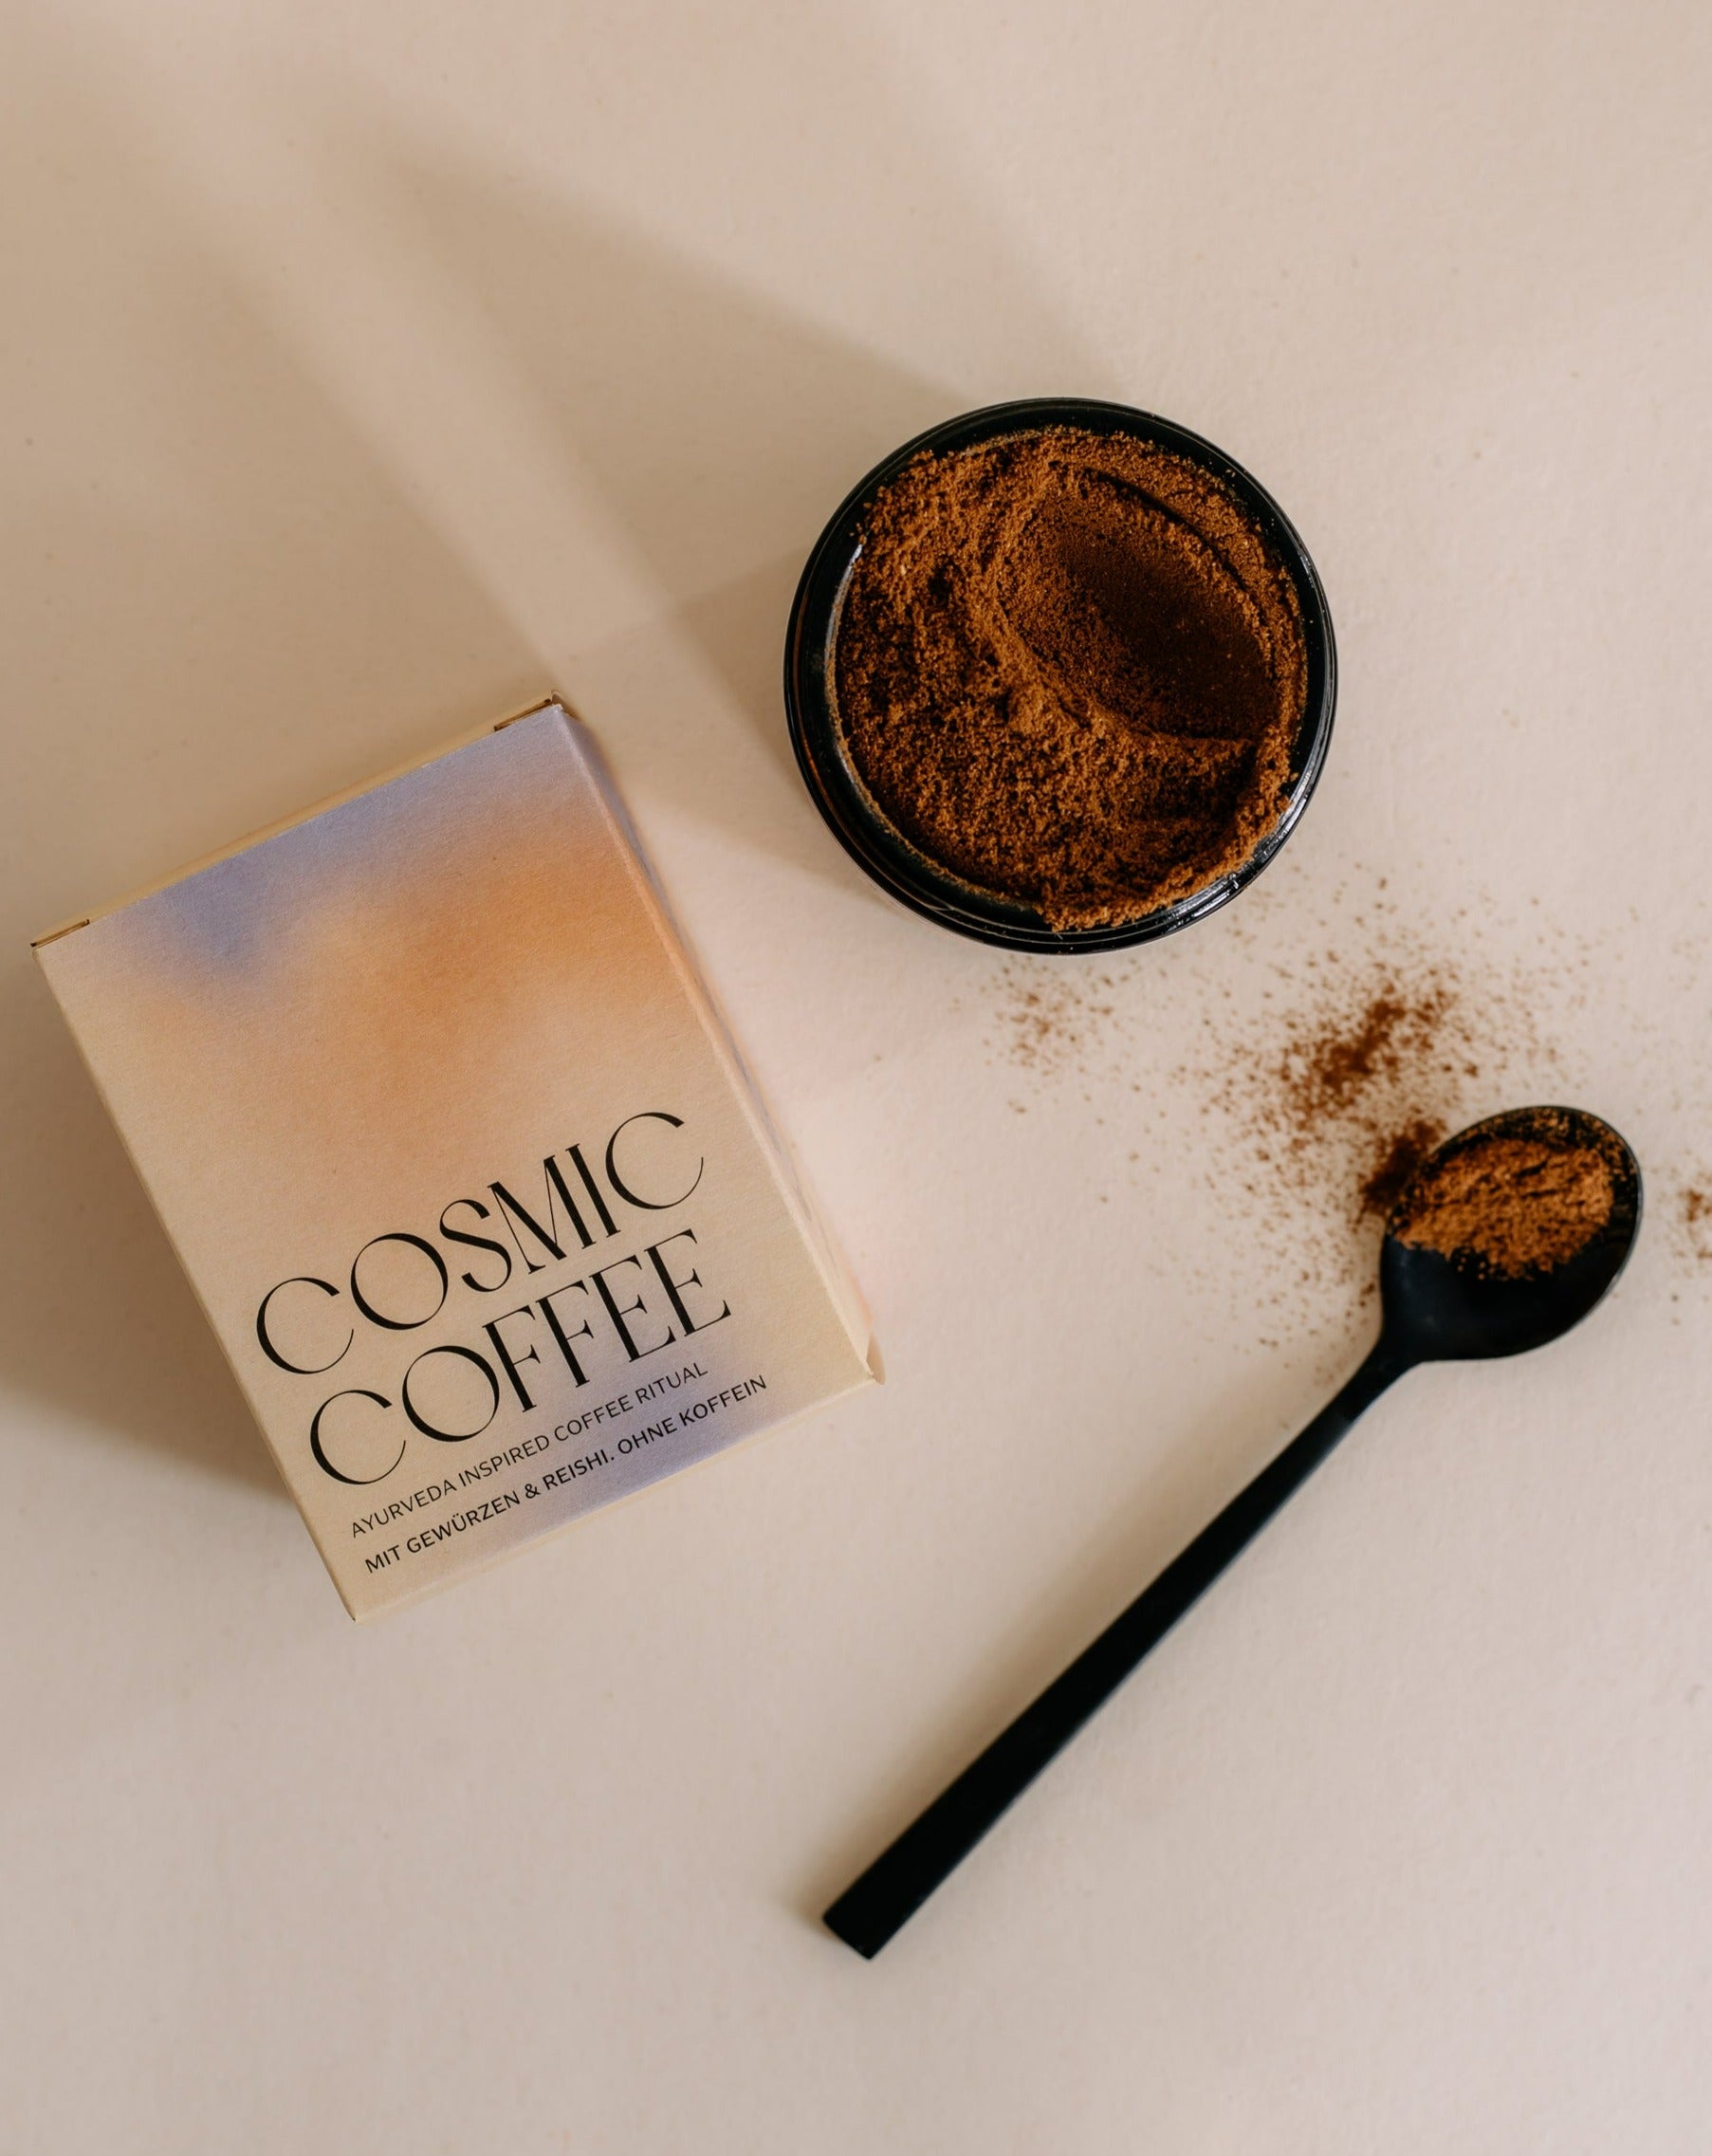 Cosmic Coffee by Ayurveda Soulfood 